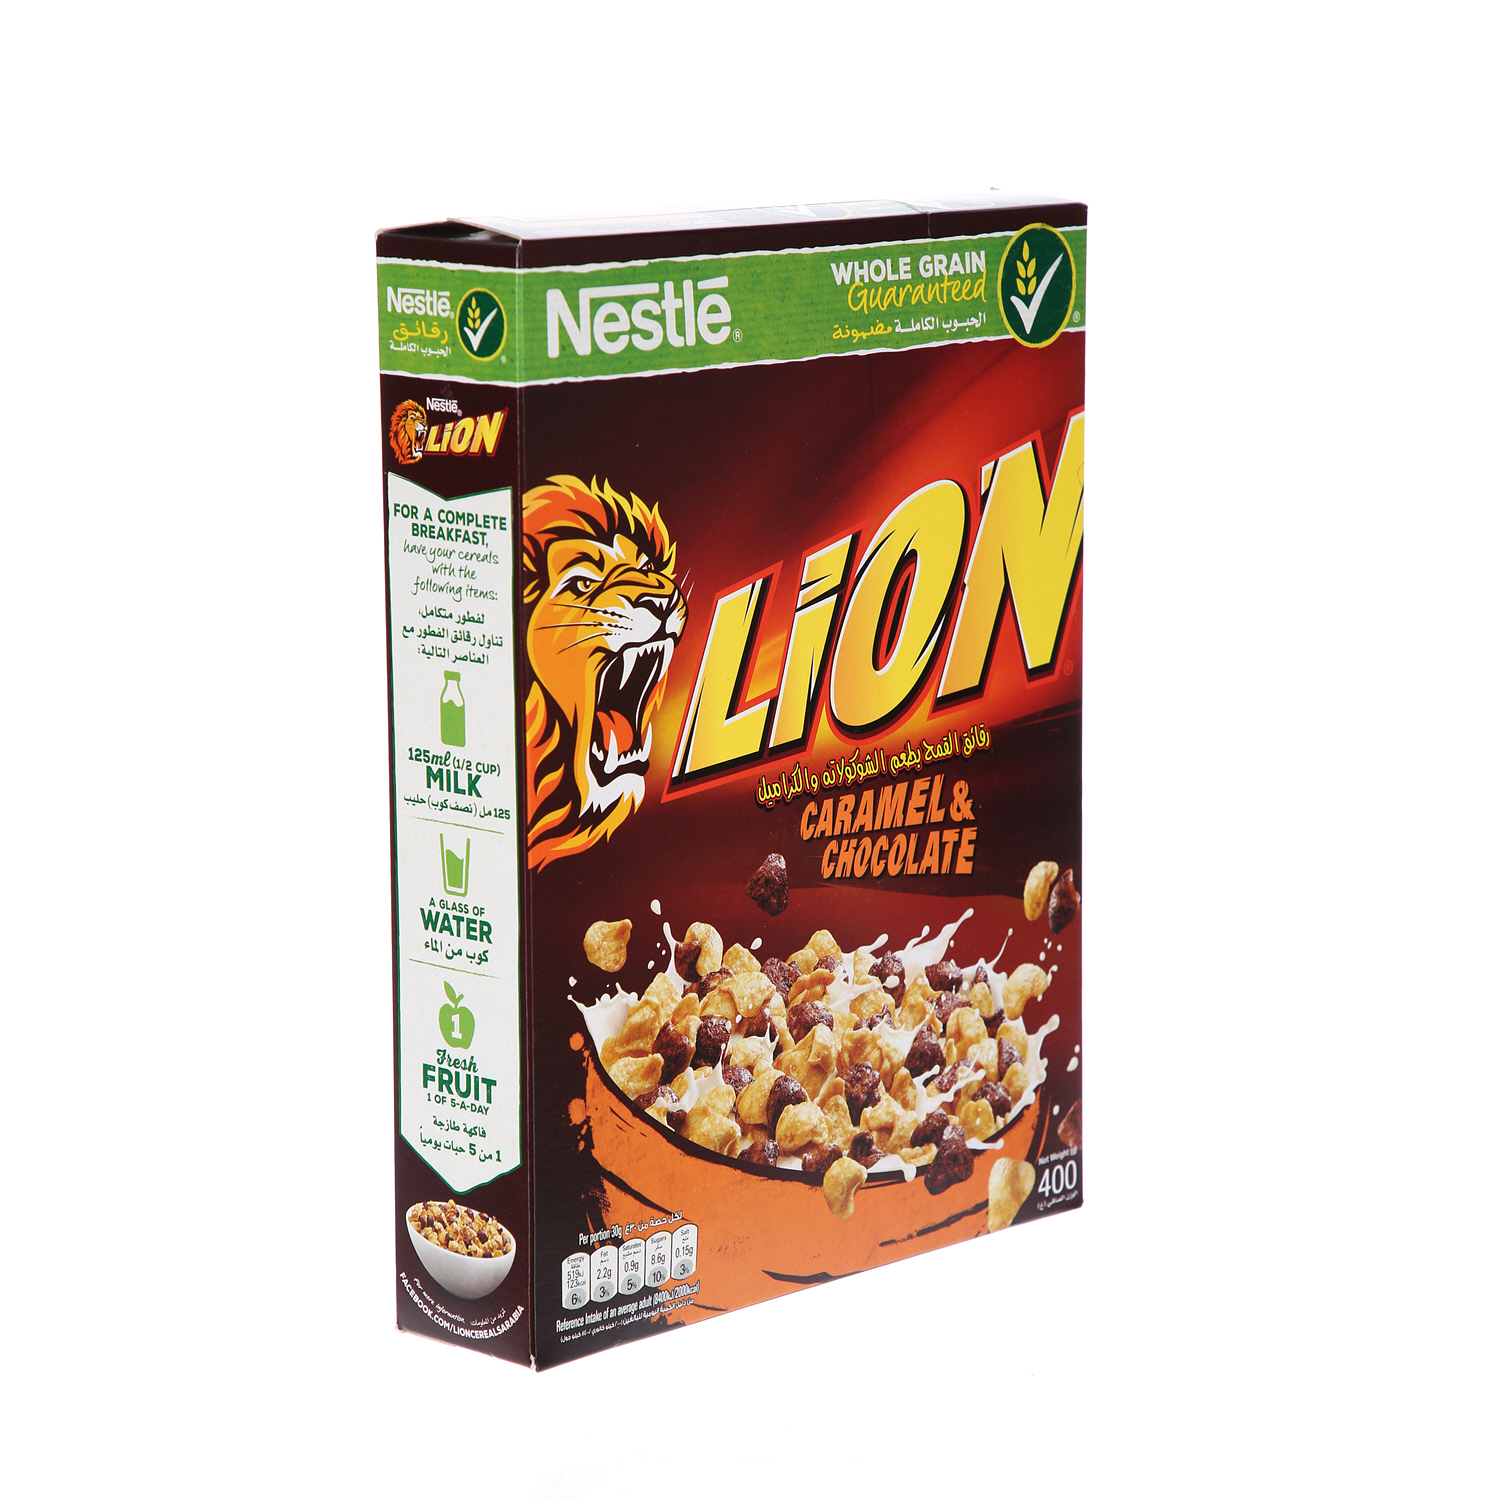 Nestlé Lion Corn Flakes Caramel & Chocolate 400 g